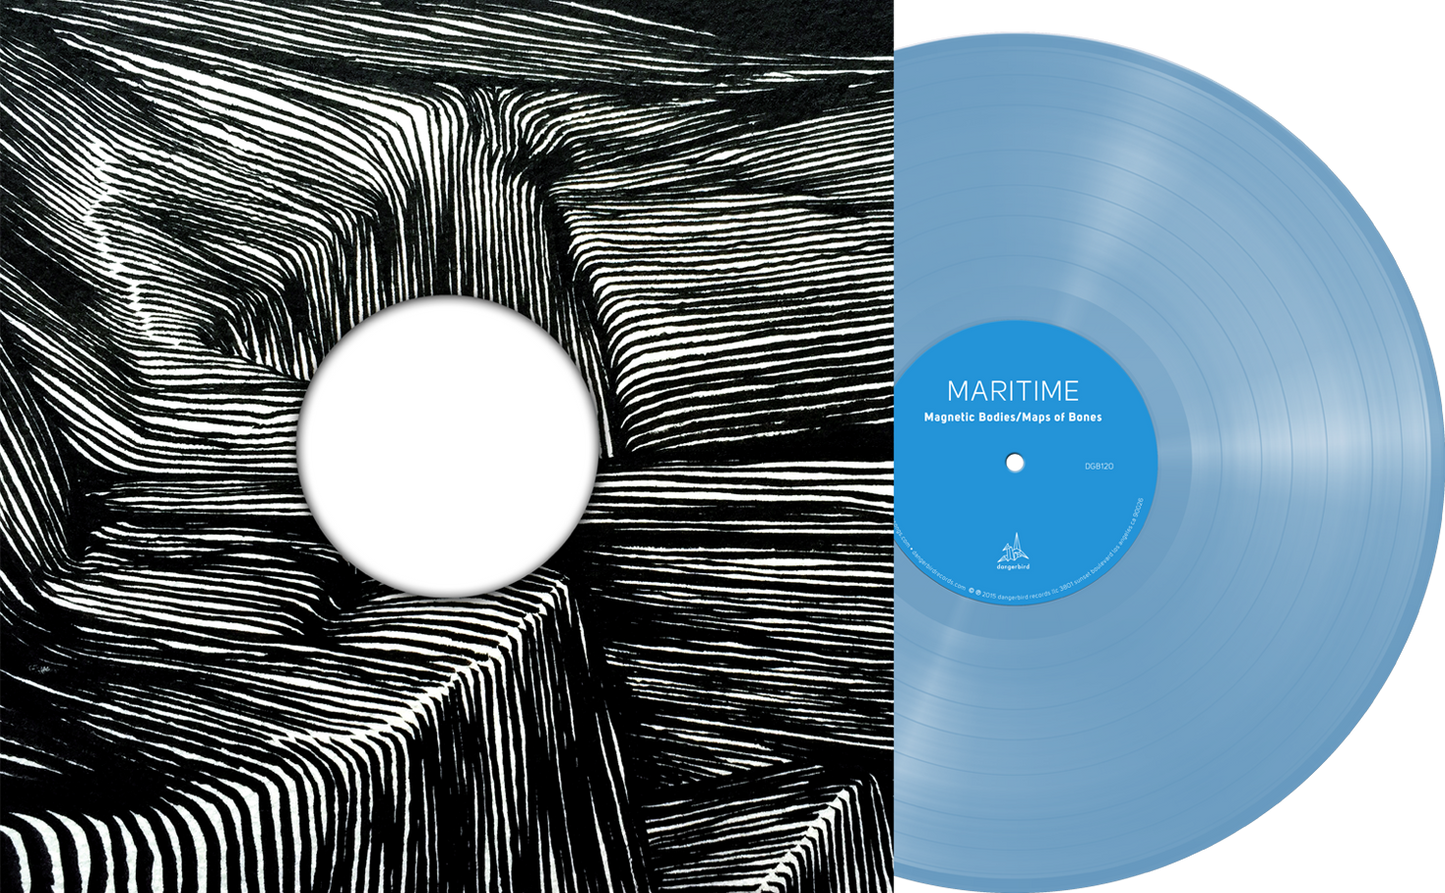 Maritime - Magnetic Bodies/Maps of Bones - Blue Vinyl LP